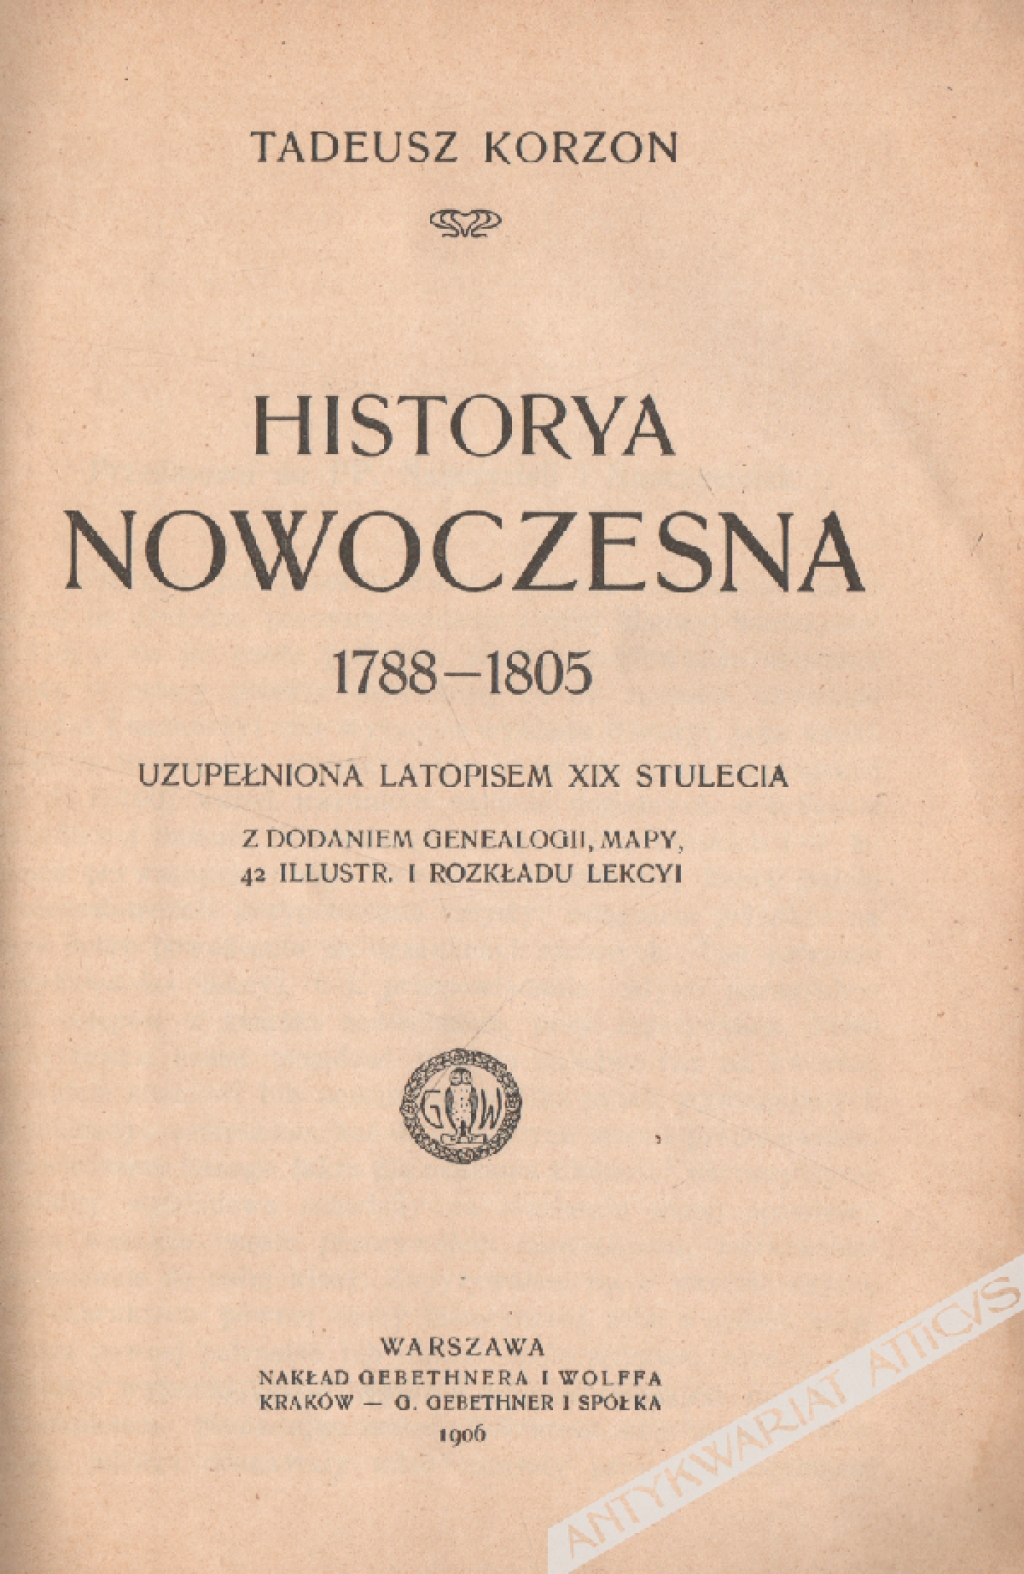 Historya nowoczesna 1788-1805 uzupełniona latopisem XIX stulecia